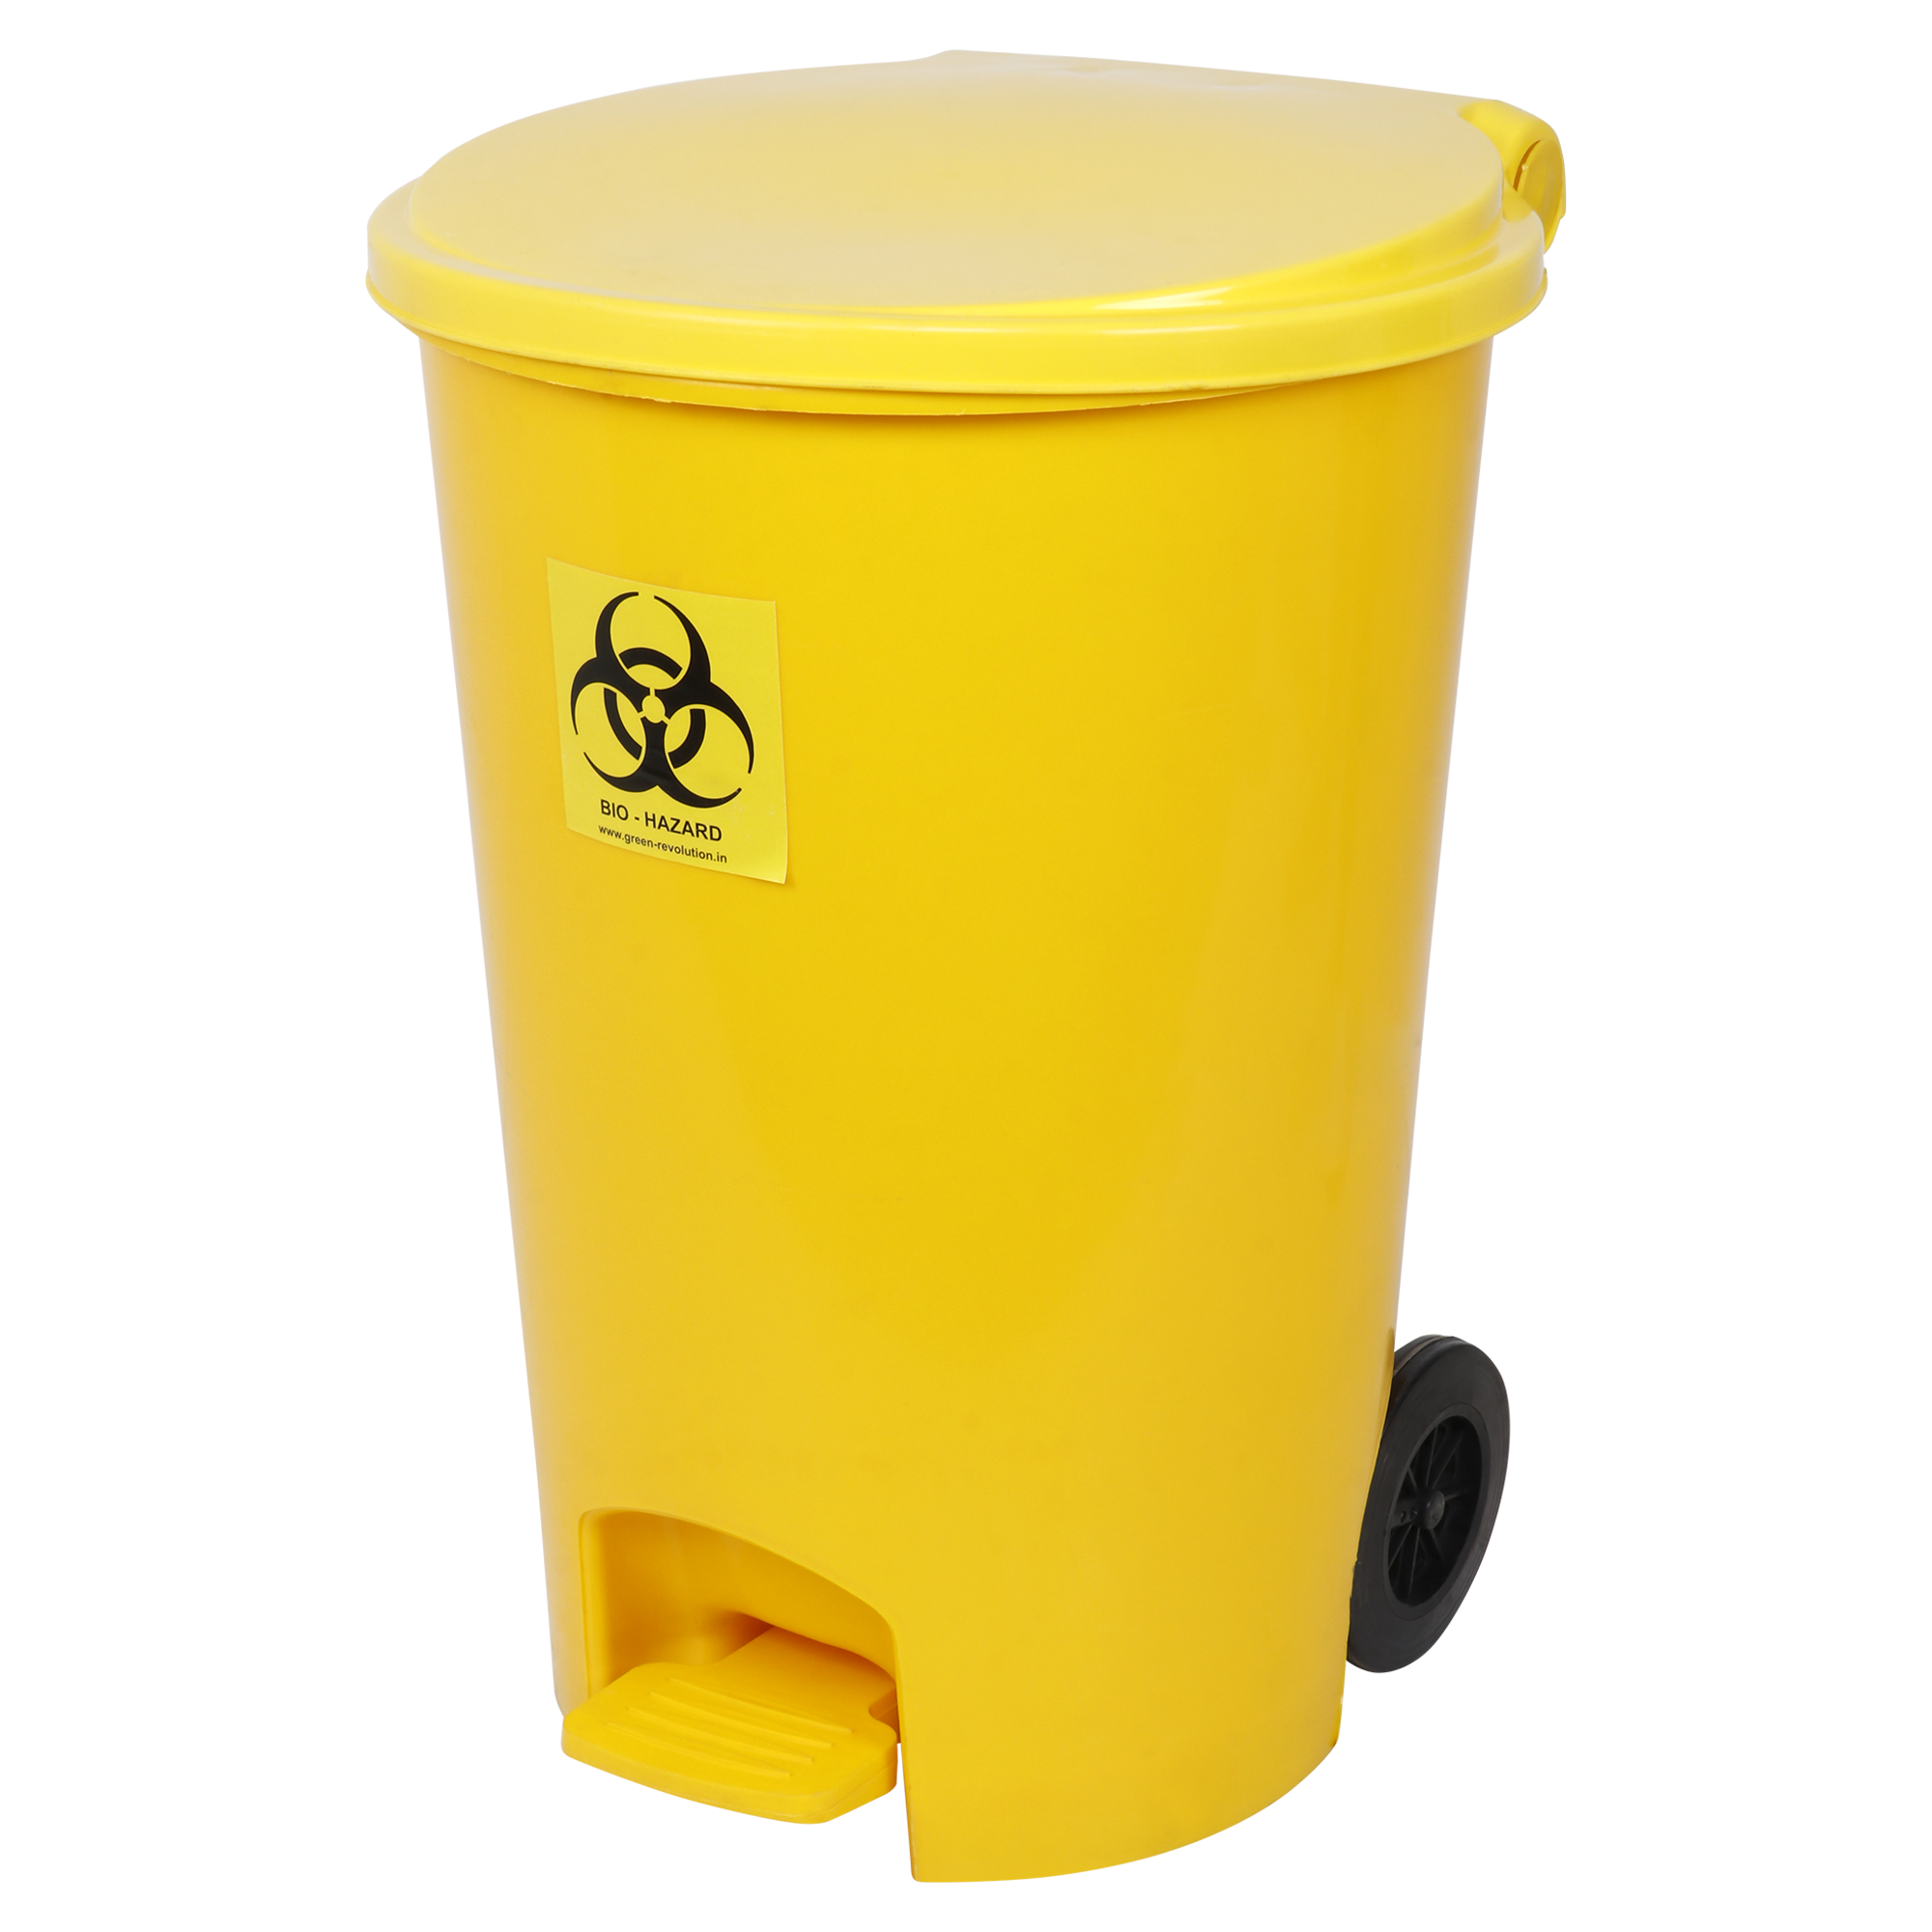 Bio Medical waste bin 55L